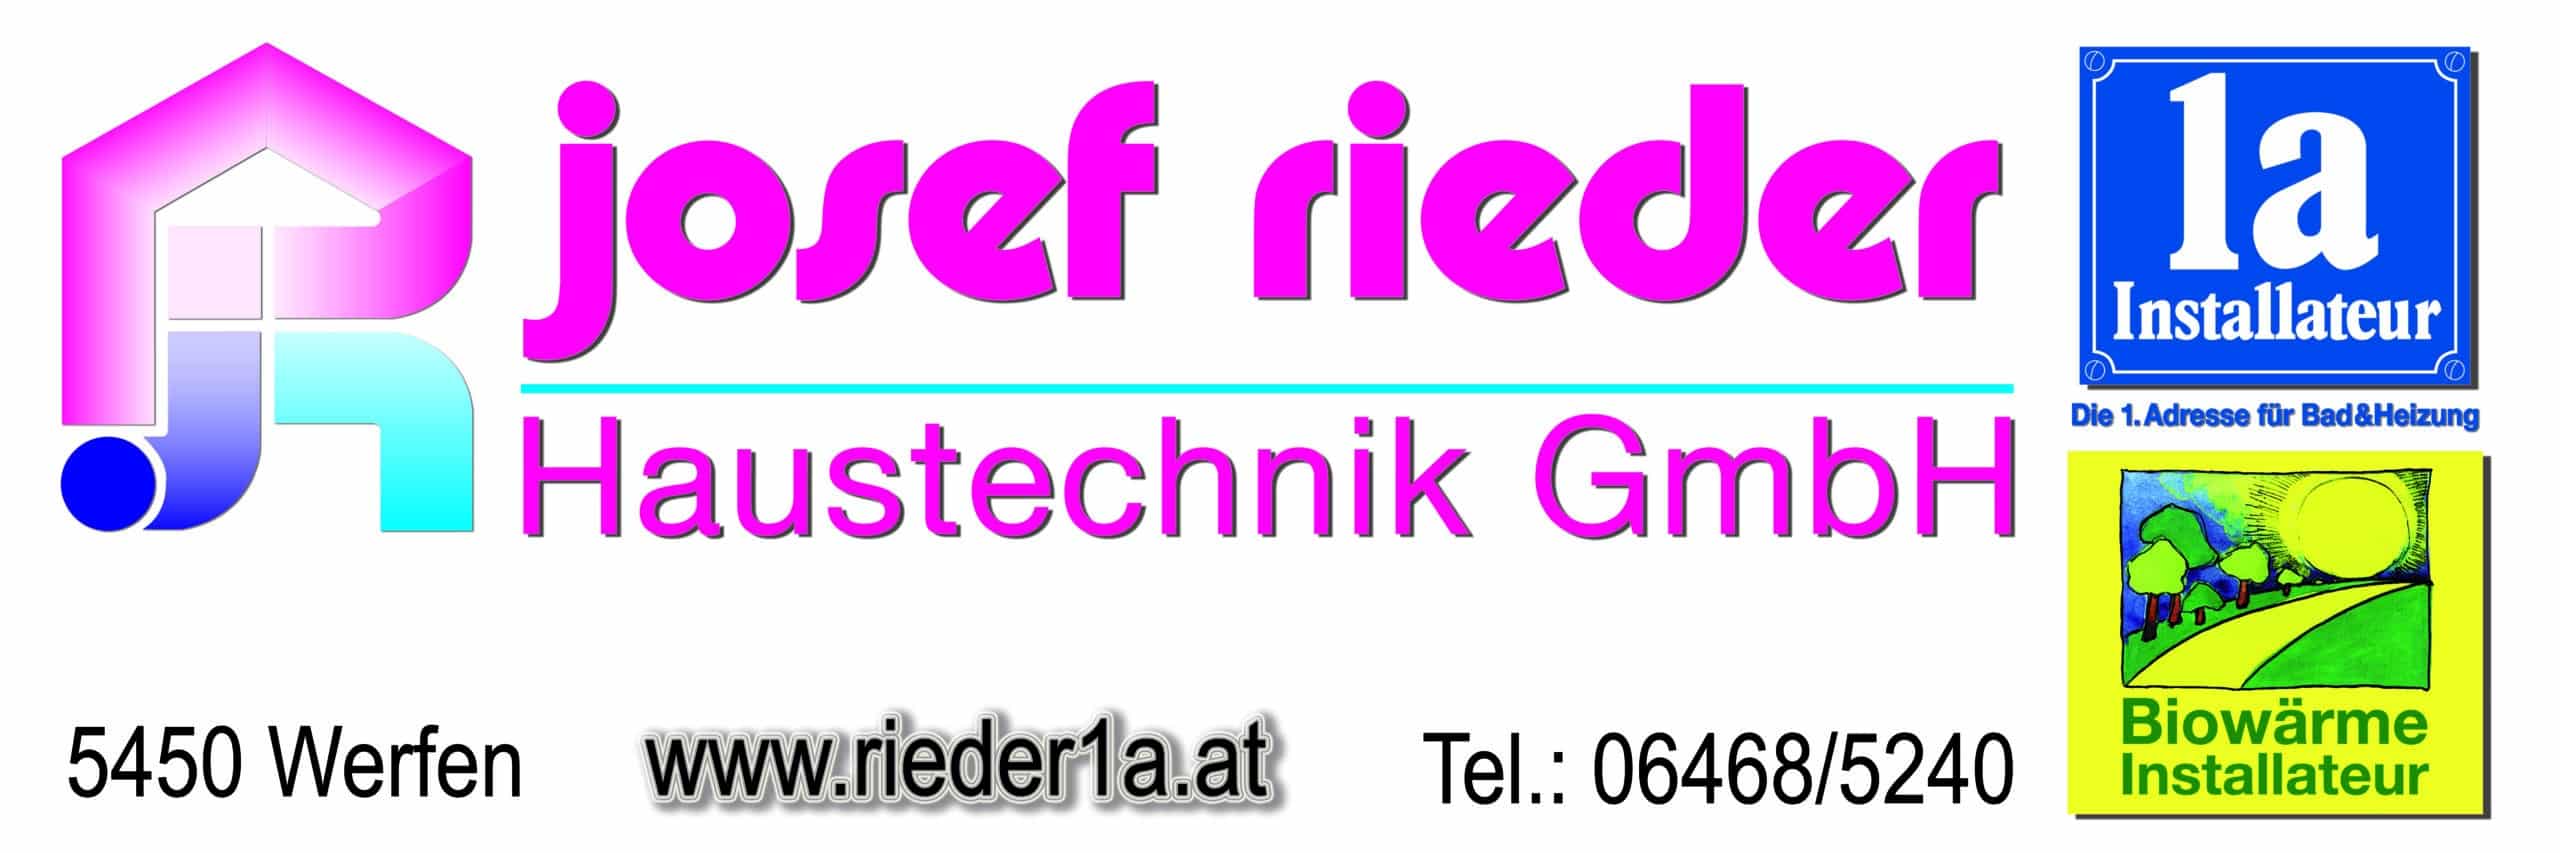 Logo Josef Rieder Haustechnik GmbH